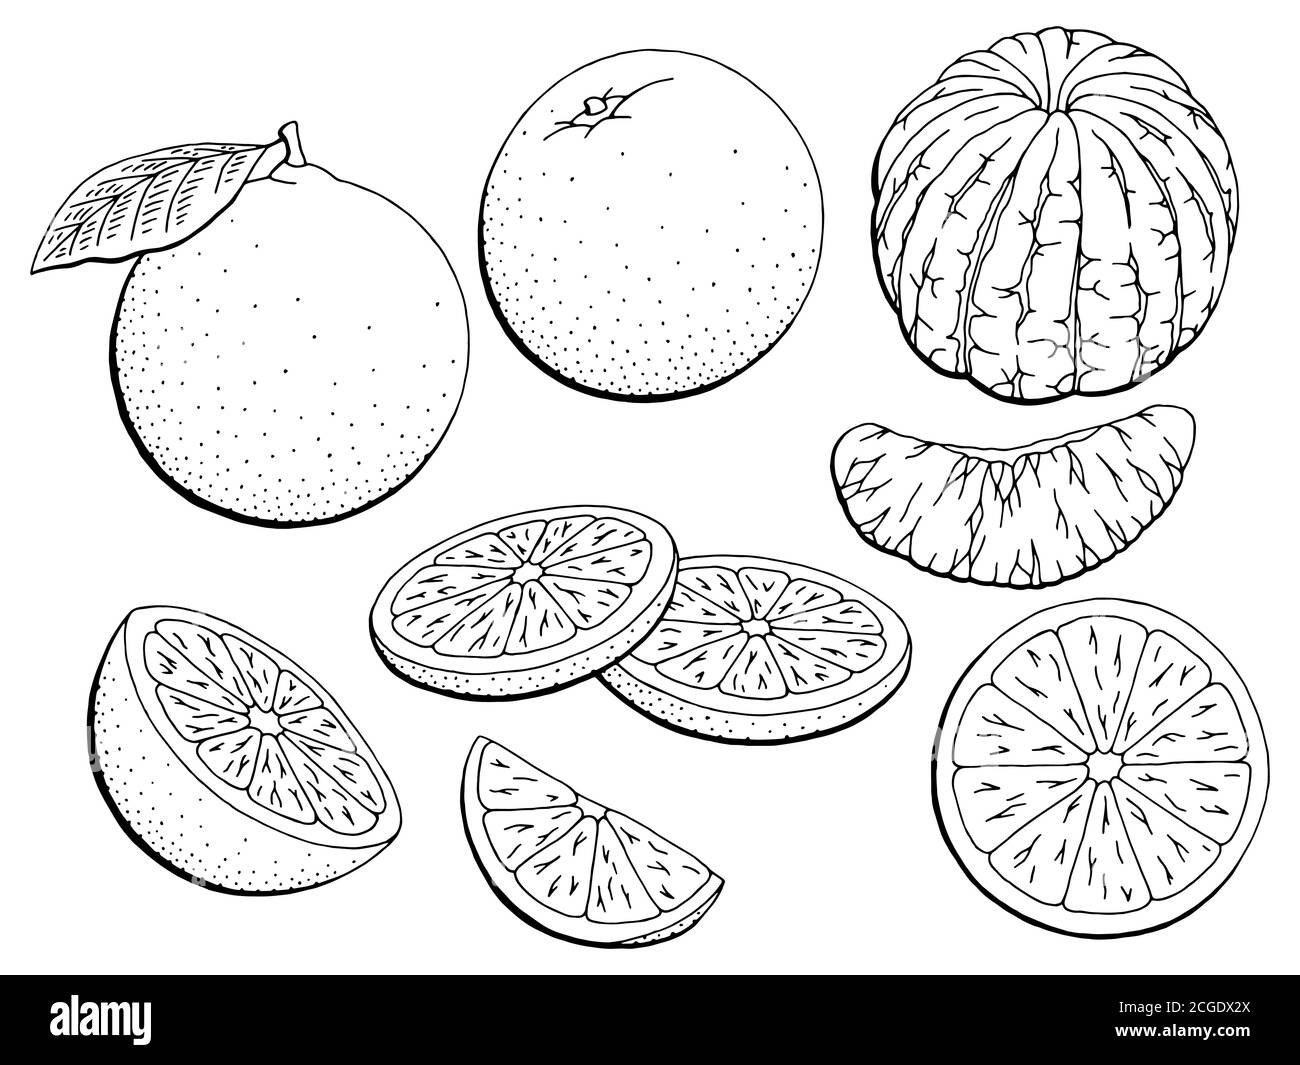 Orange Obst Grafik schwarz weiß isoliert Skizze Illustration Vektor  Stock-Vektorgrafik - Alamy